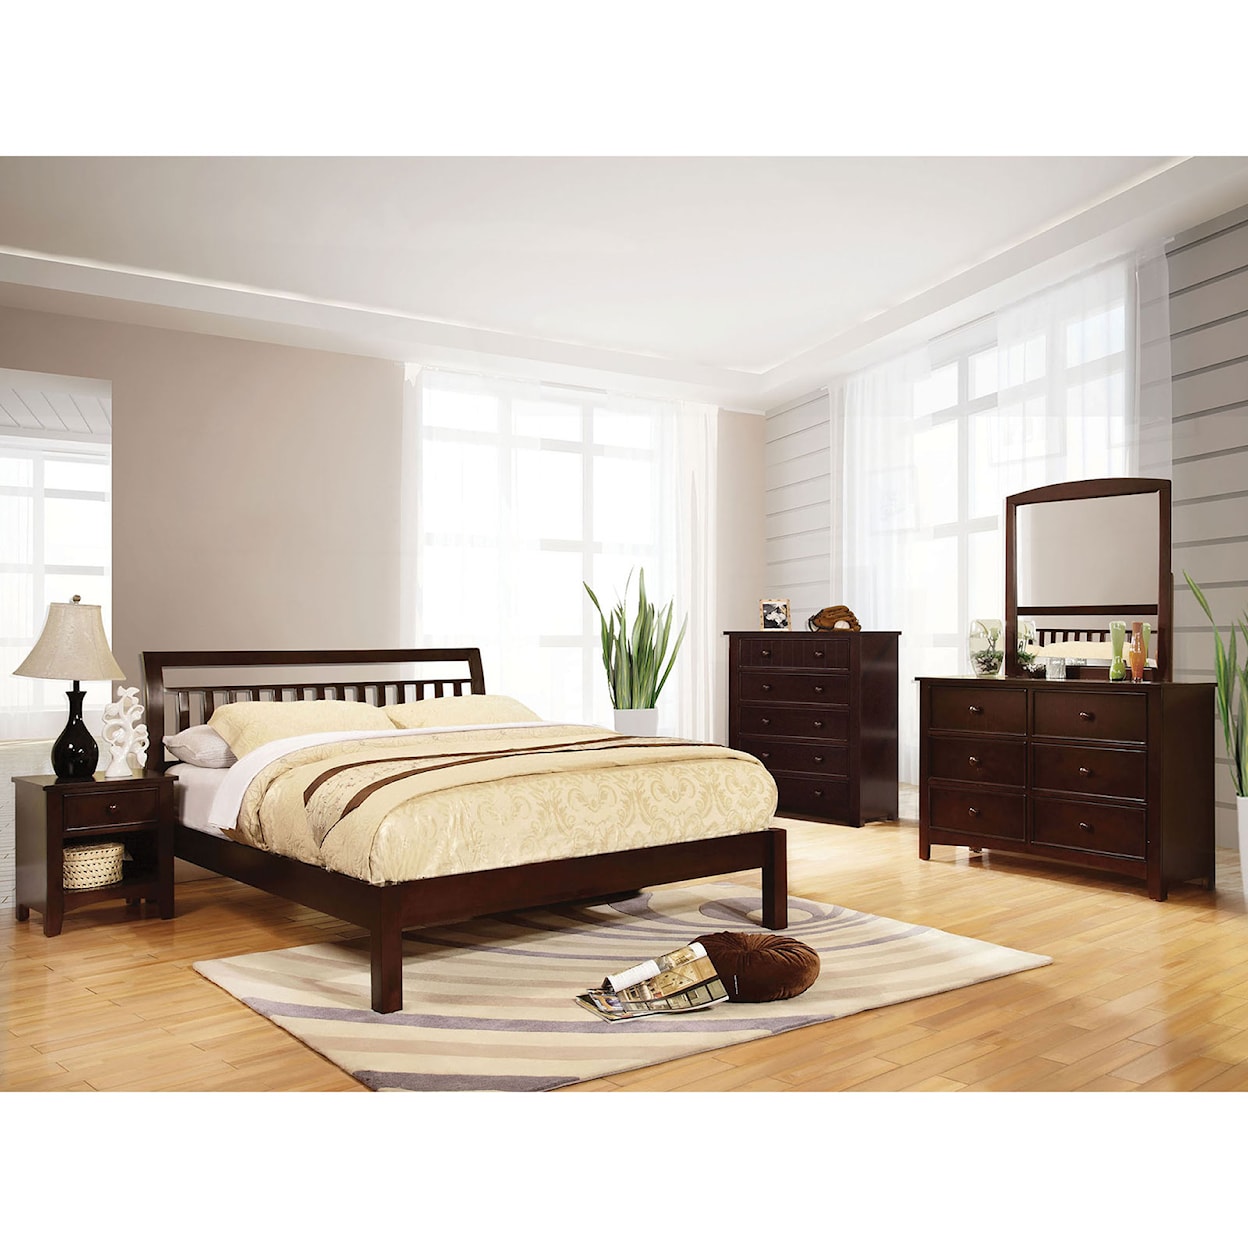 Furniture of America Corry Queen Bedroom Set